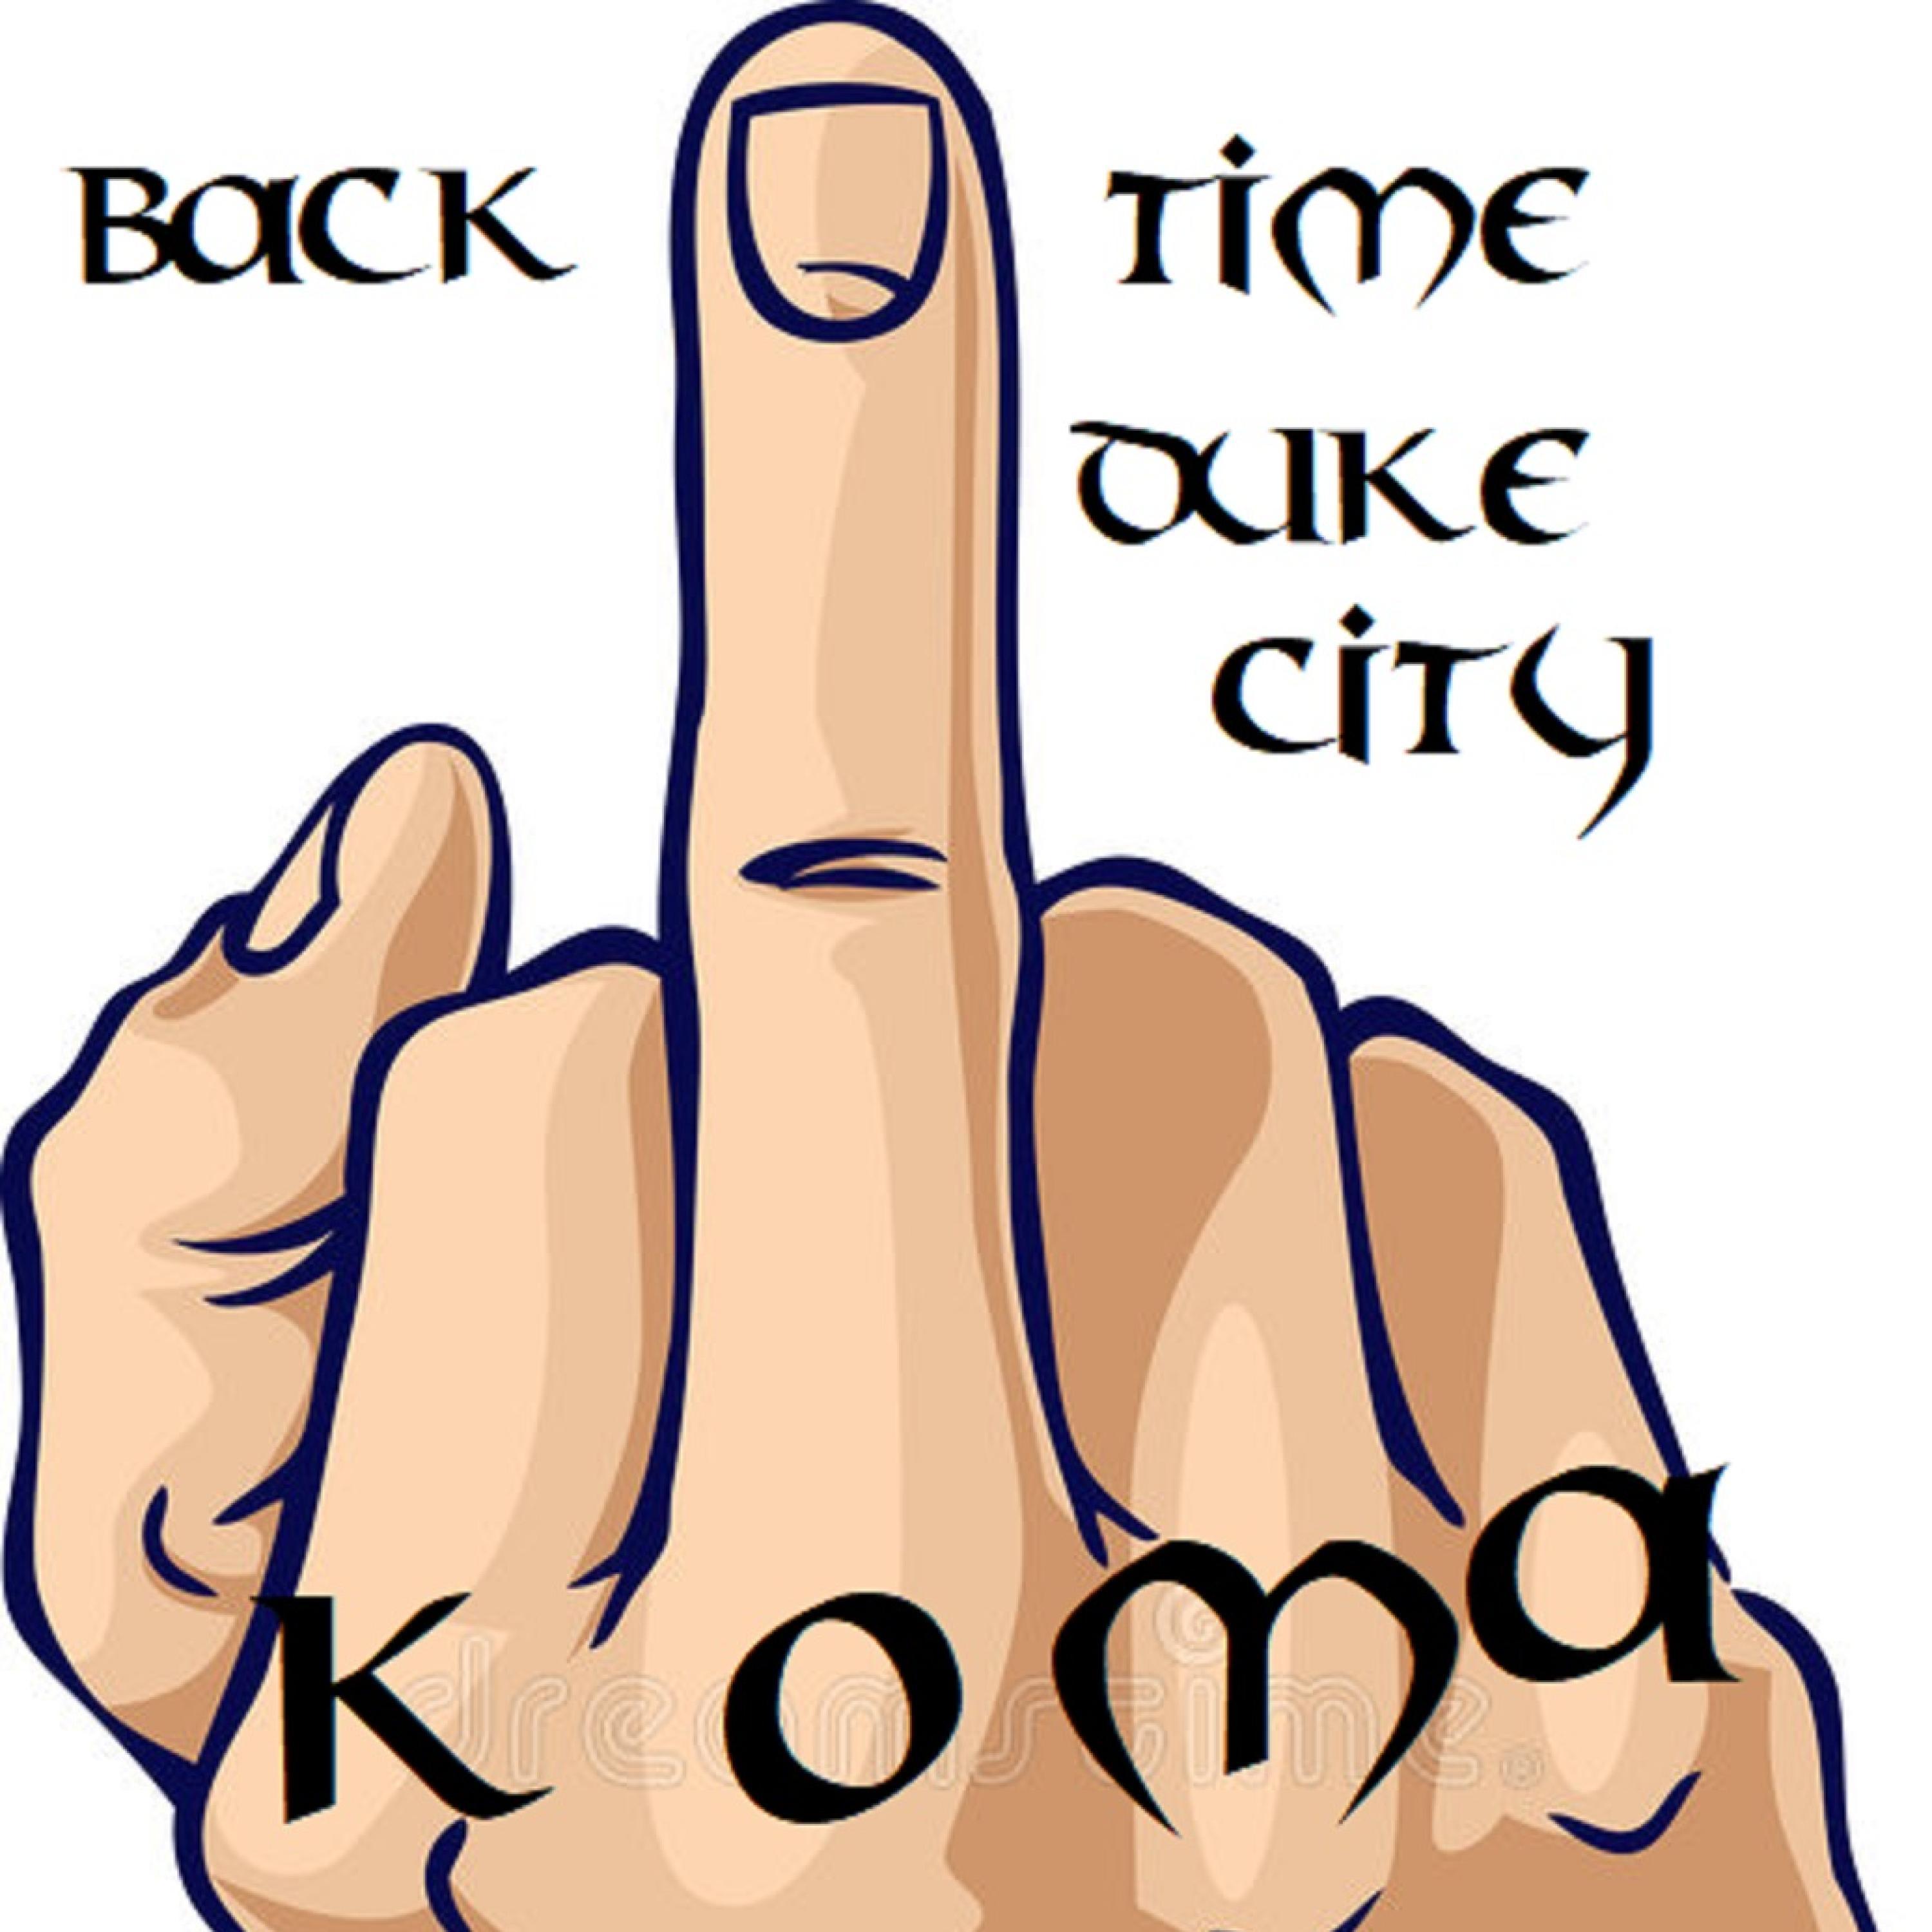 Duke City Koma - BURQUE STYLE (feat. SANDMANN)